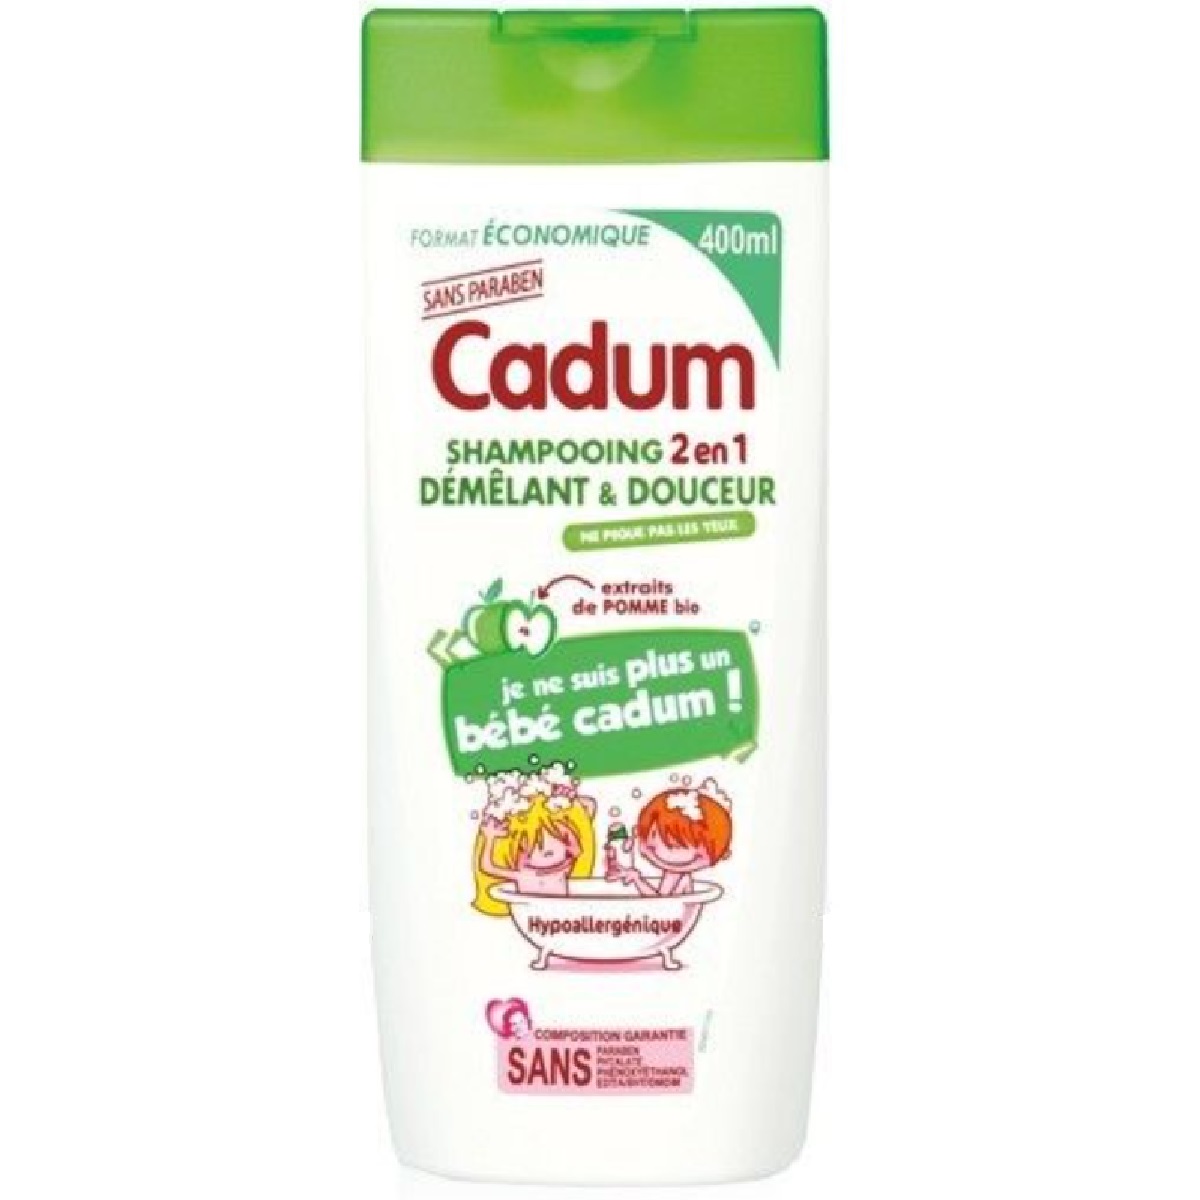 Cadum 2 in 1 detangling shampoo with apple extract ORGANIC 400ml